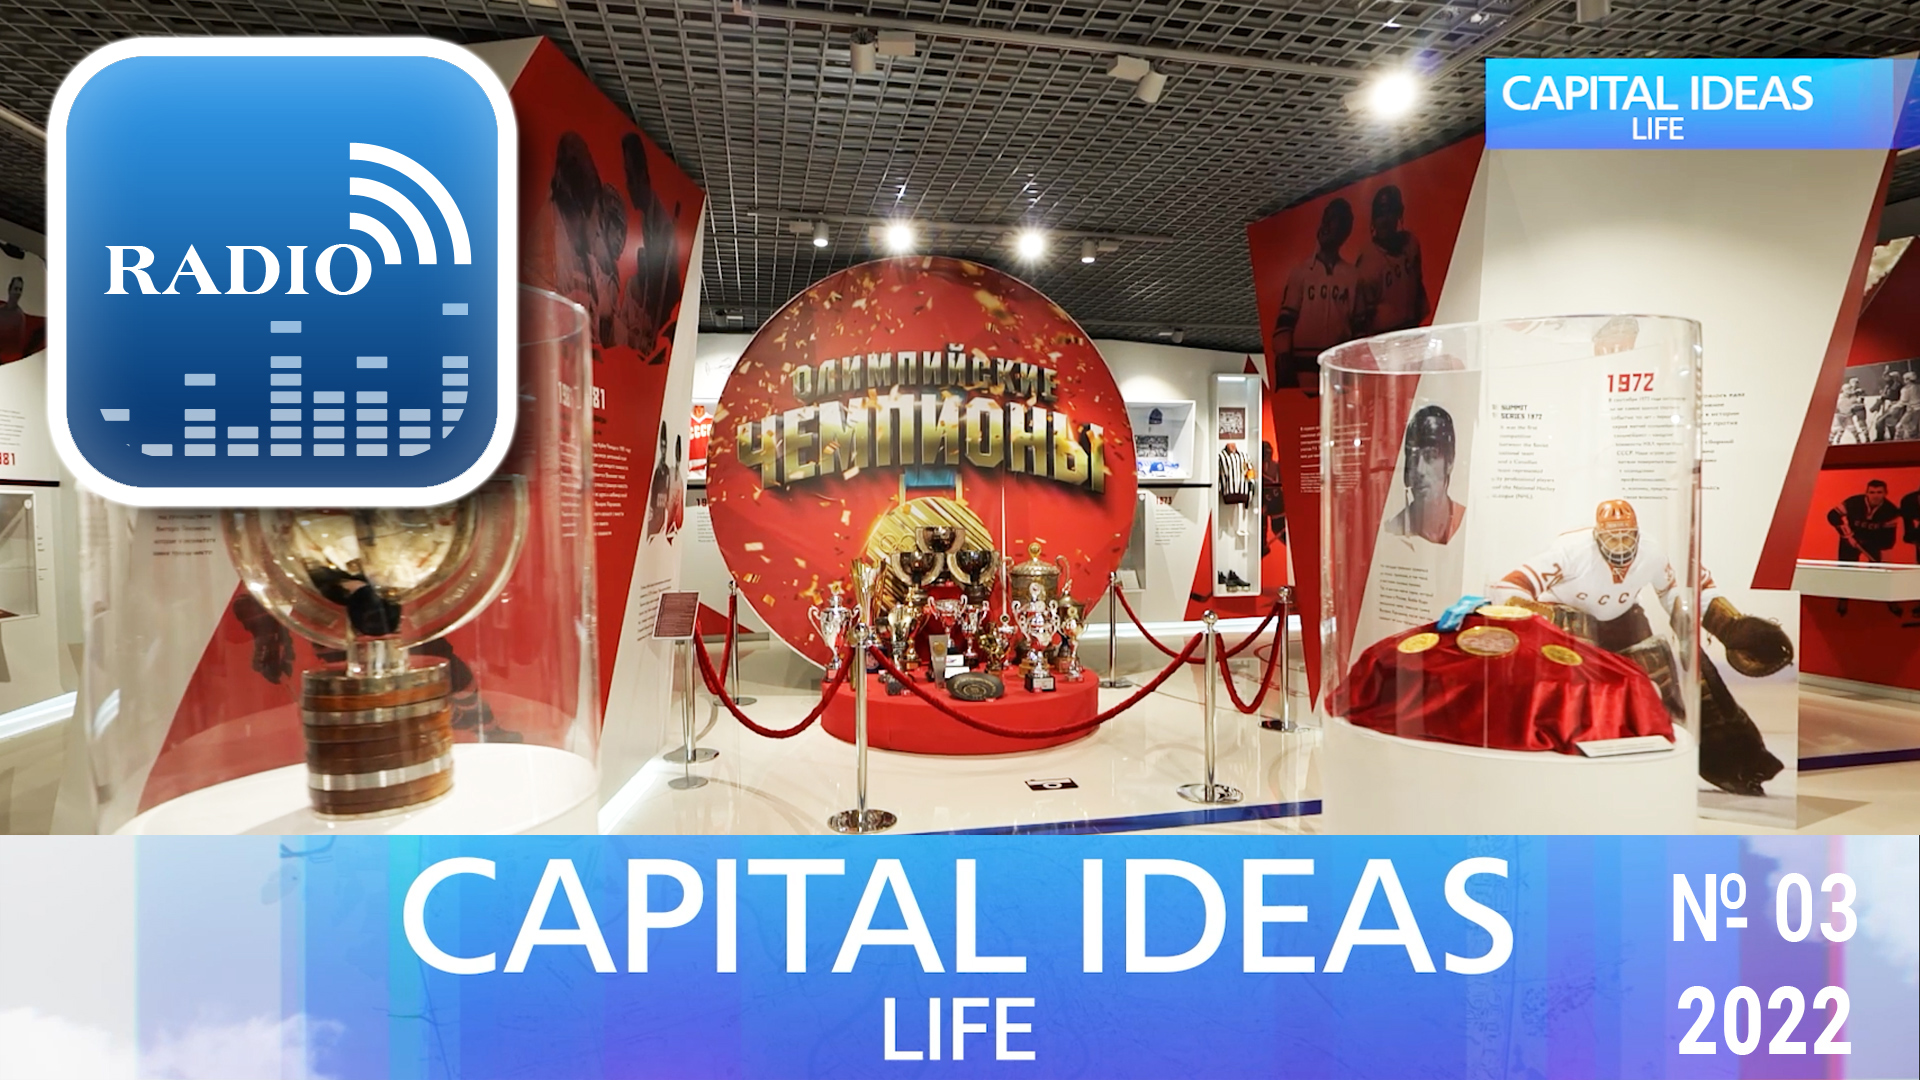 Capital Ideas Life #3-2022 Audio theme